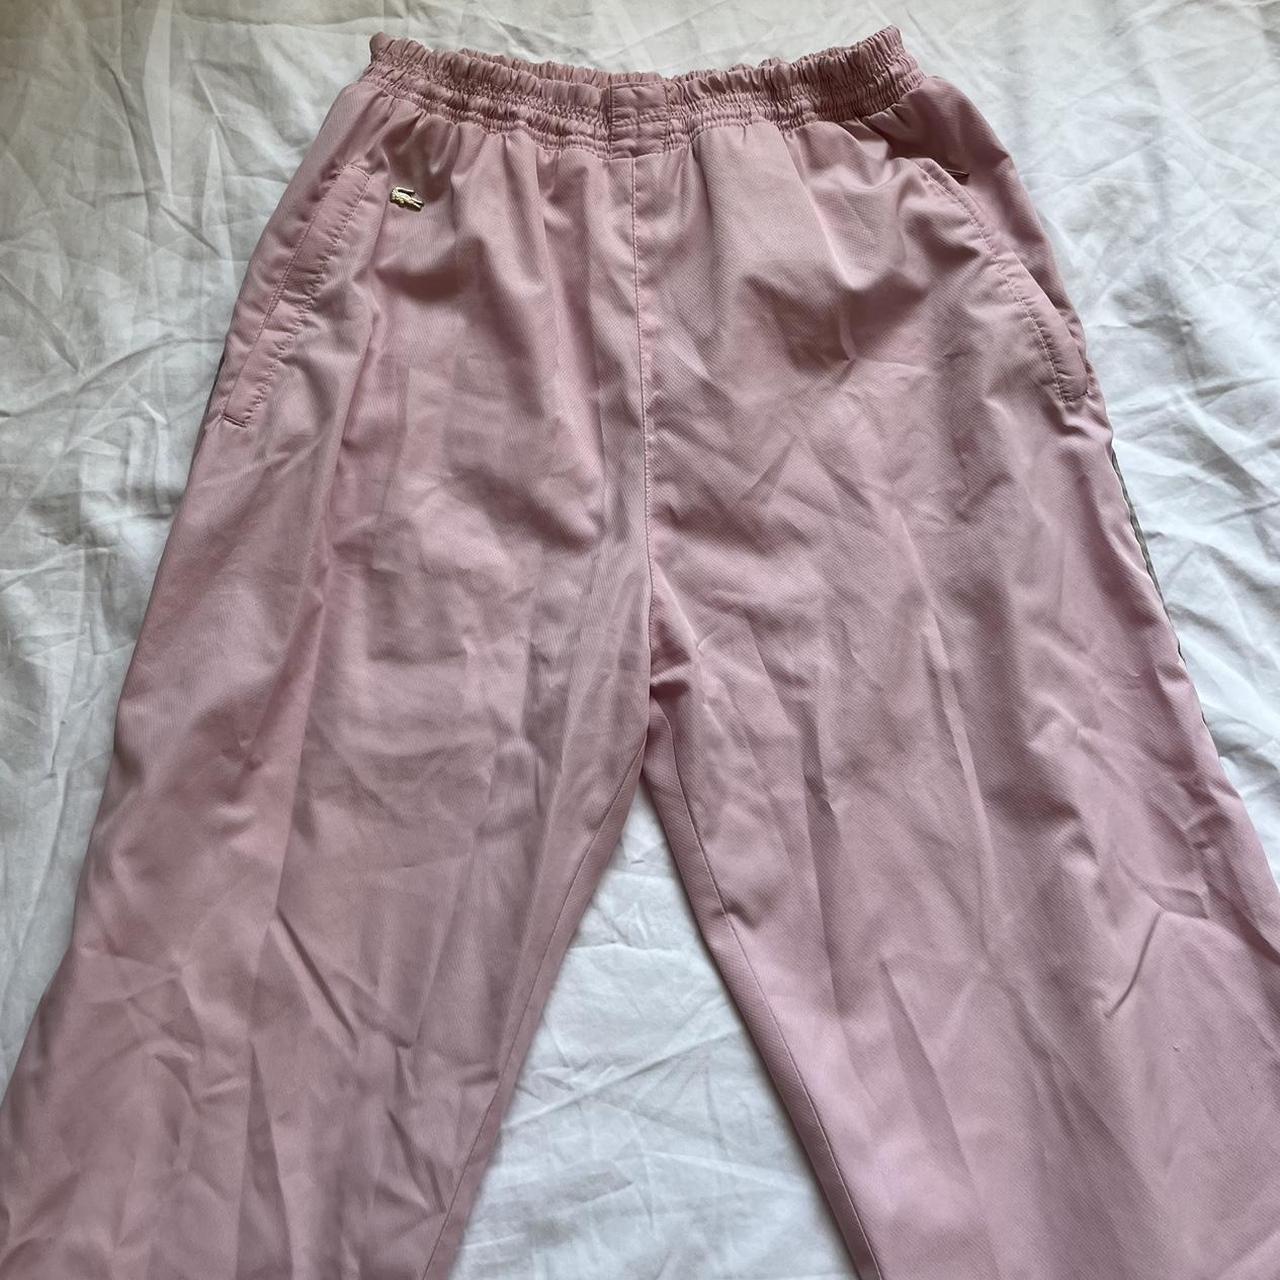 pink lacoste track pants, size medium💐 - Depop